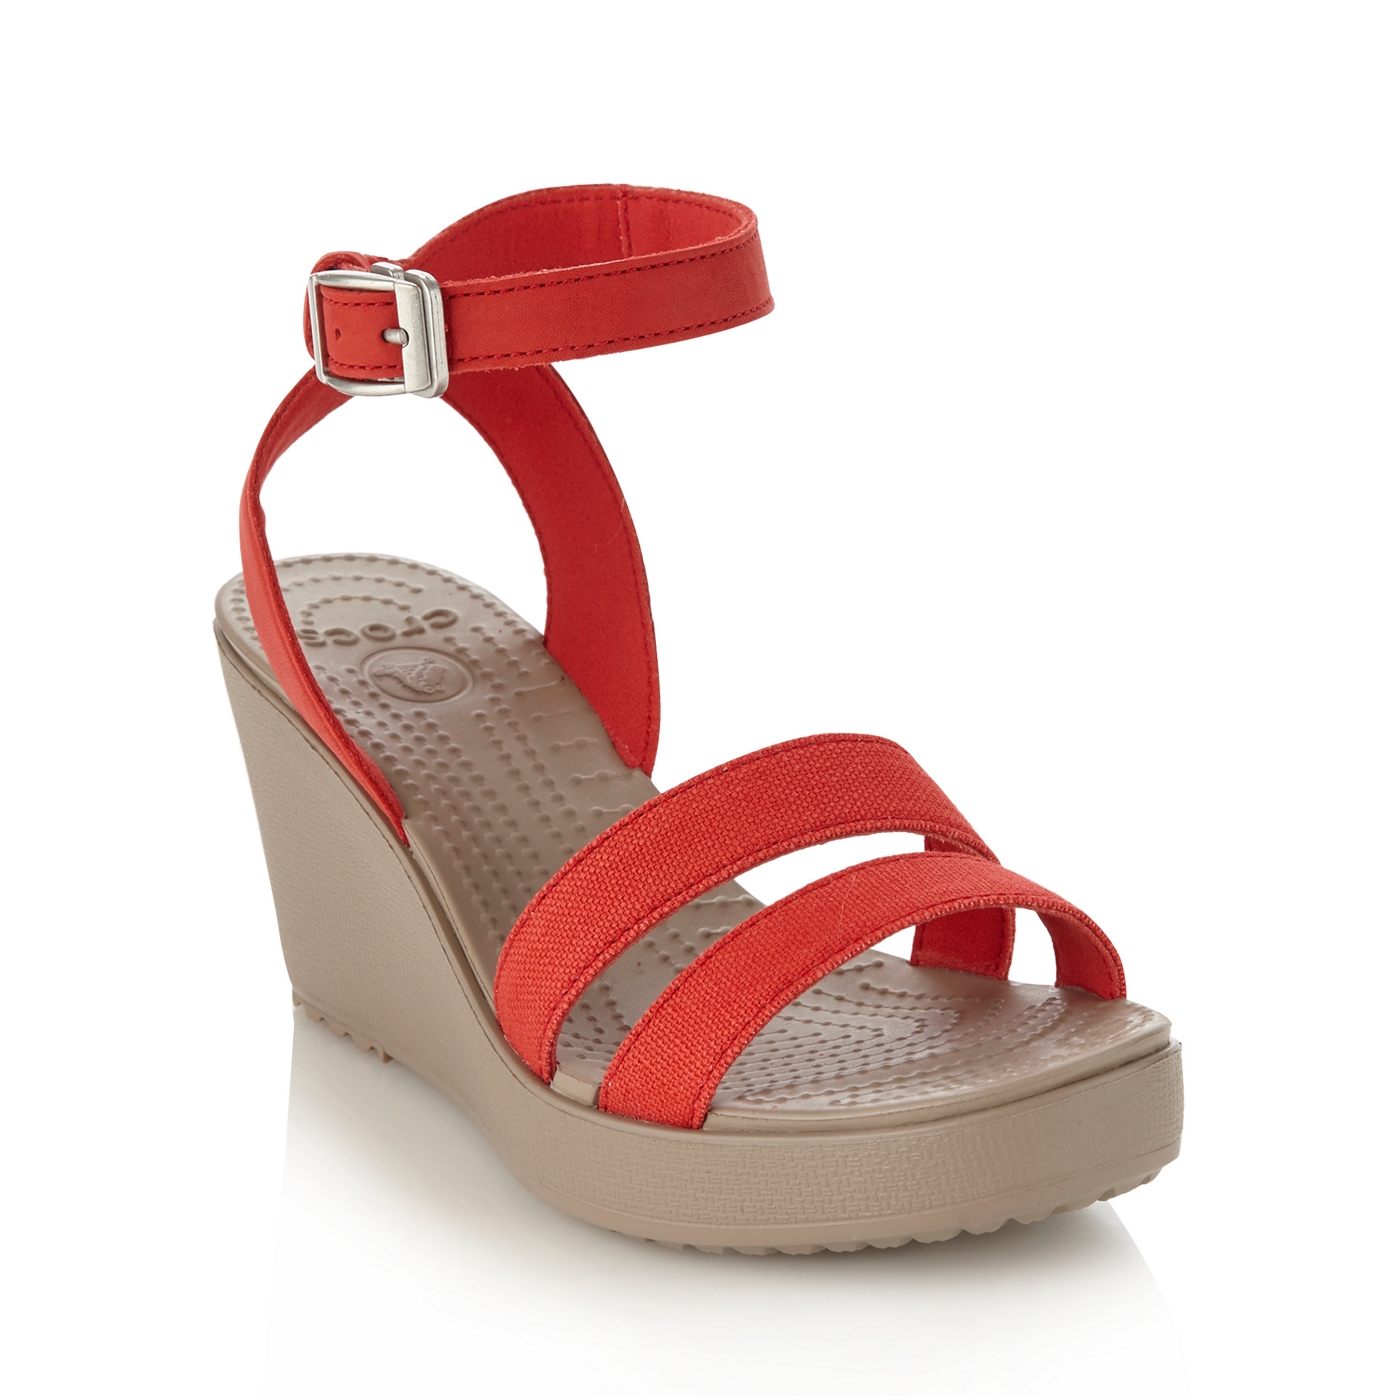 Crocs Red high wedge heeled sandals